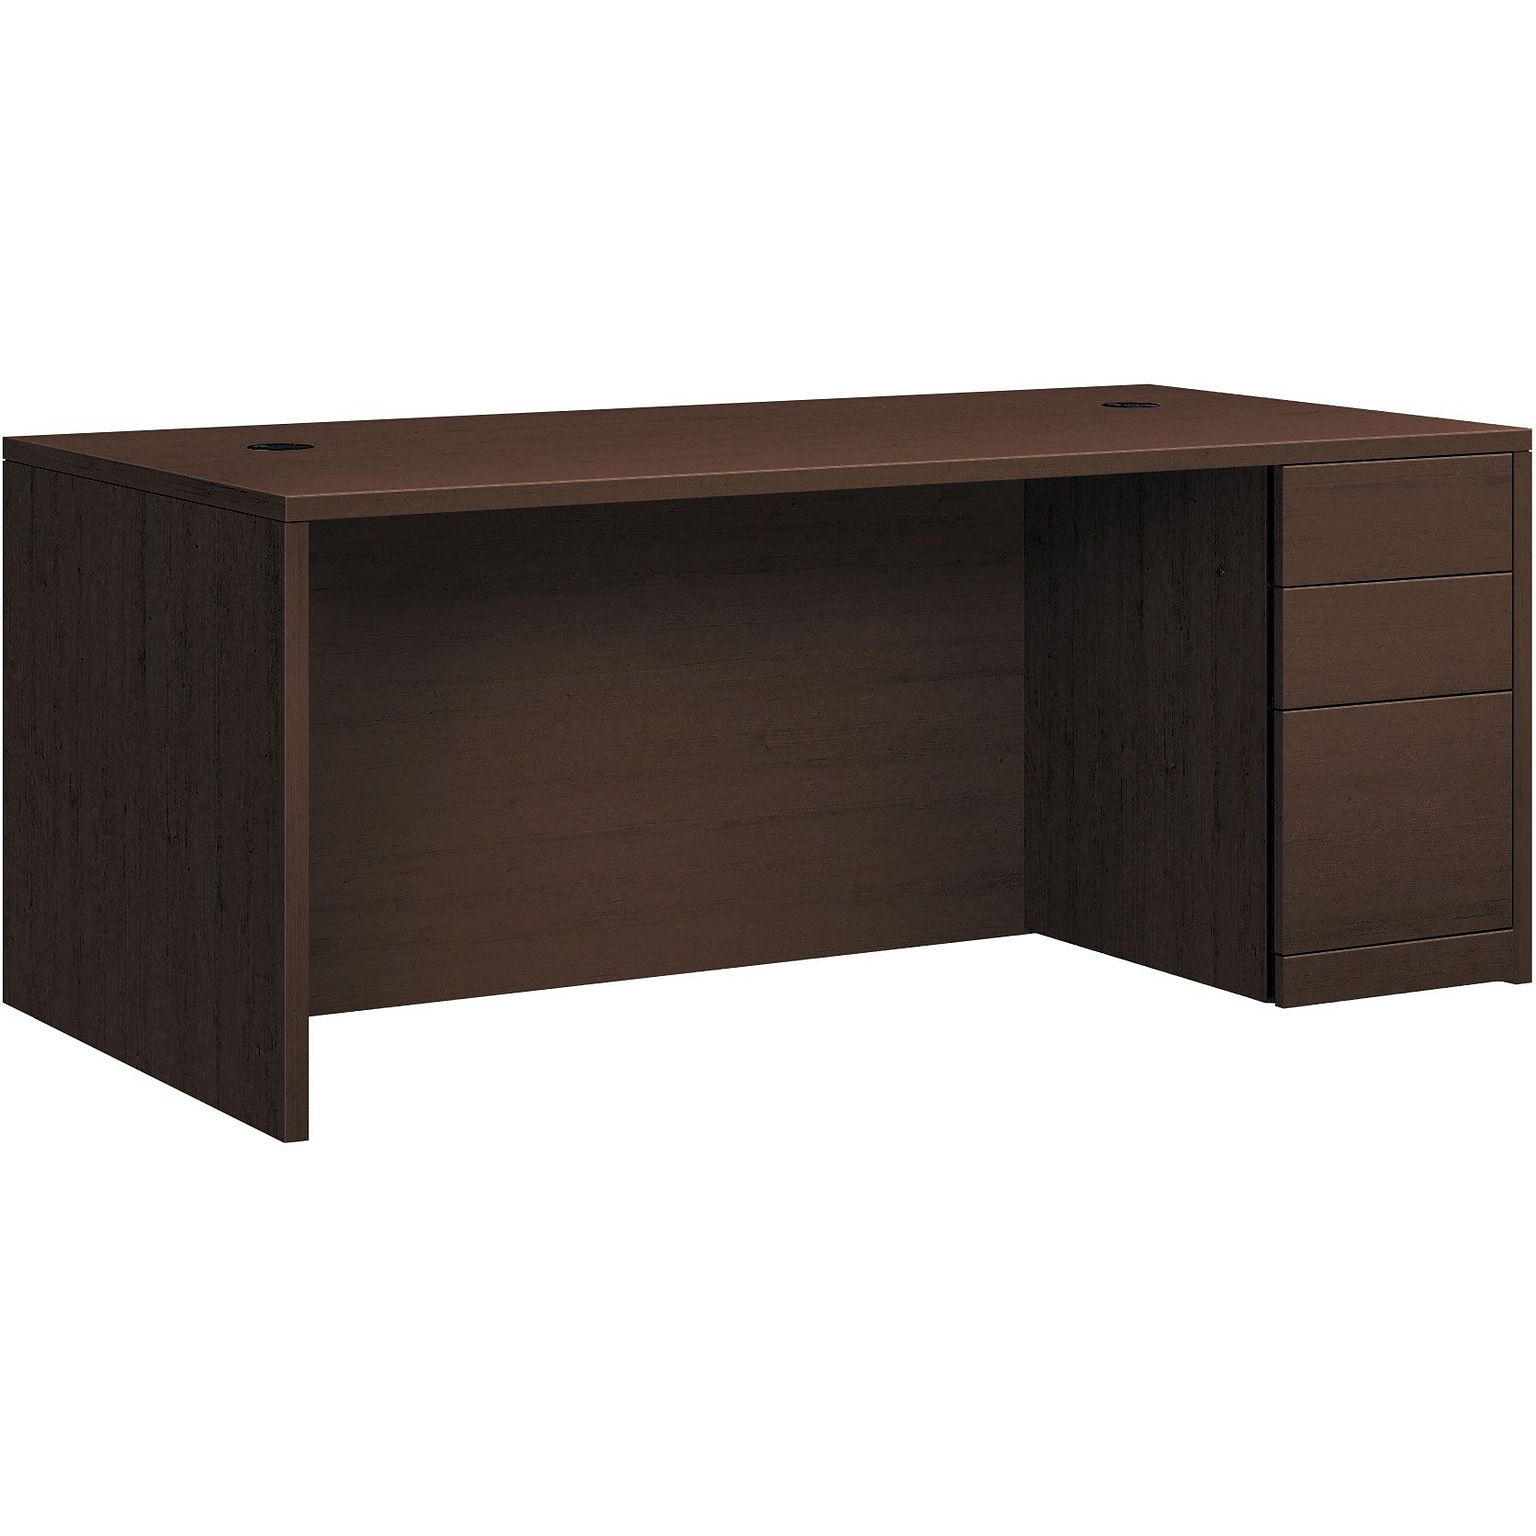 HON 10500 Series Right Pedestal Desk, 2 Box/1 File Drawer, 72W, Mocha Finish